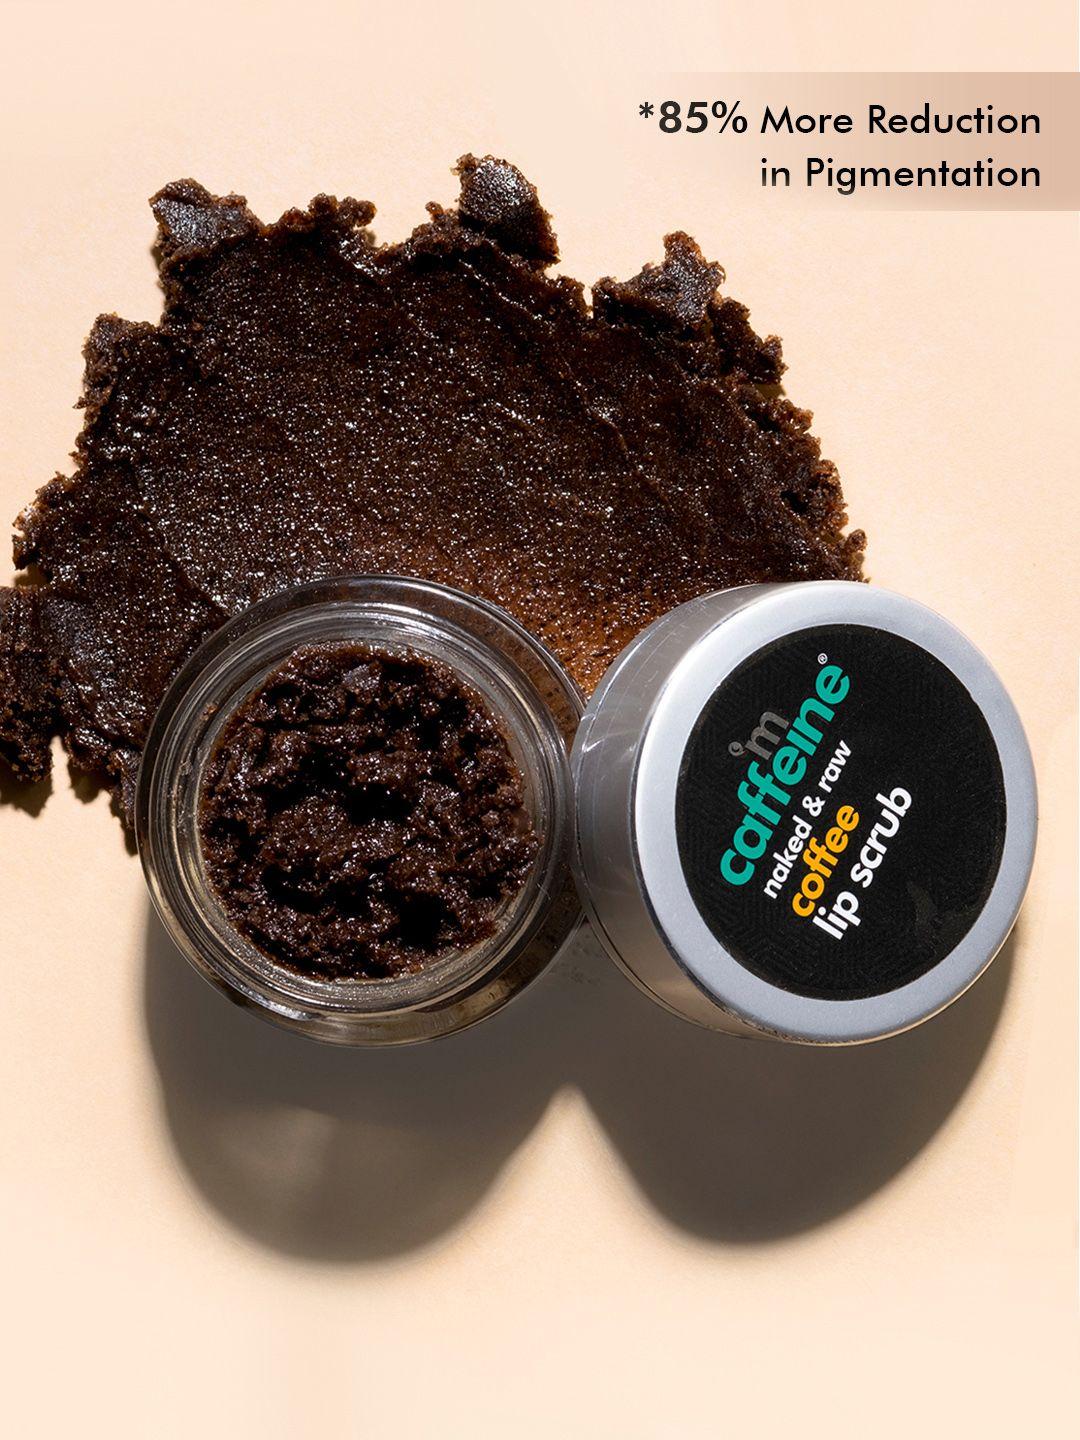 mcaffeine coffee lip scrub for reducing pigmentation & curing chapped lips 12g